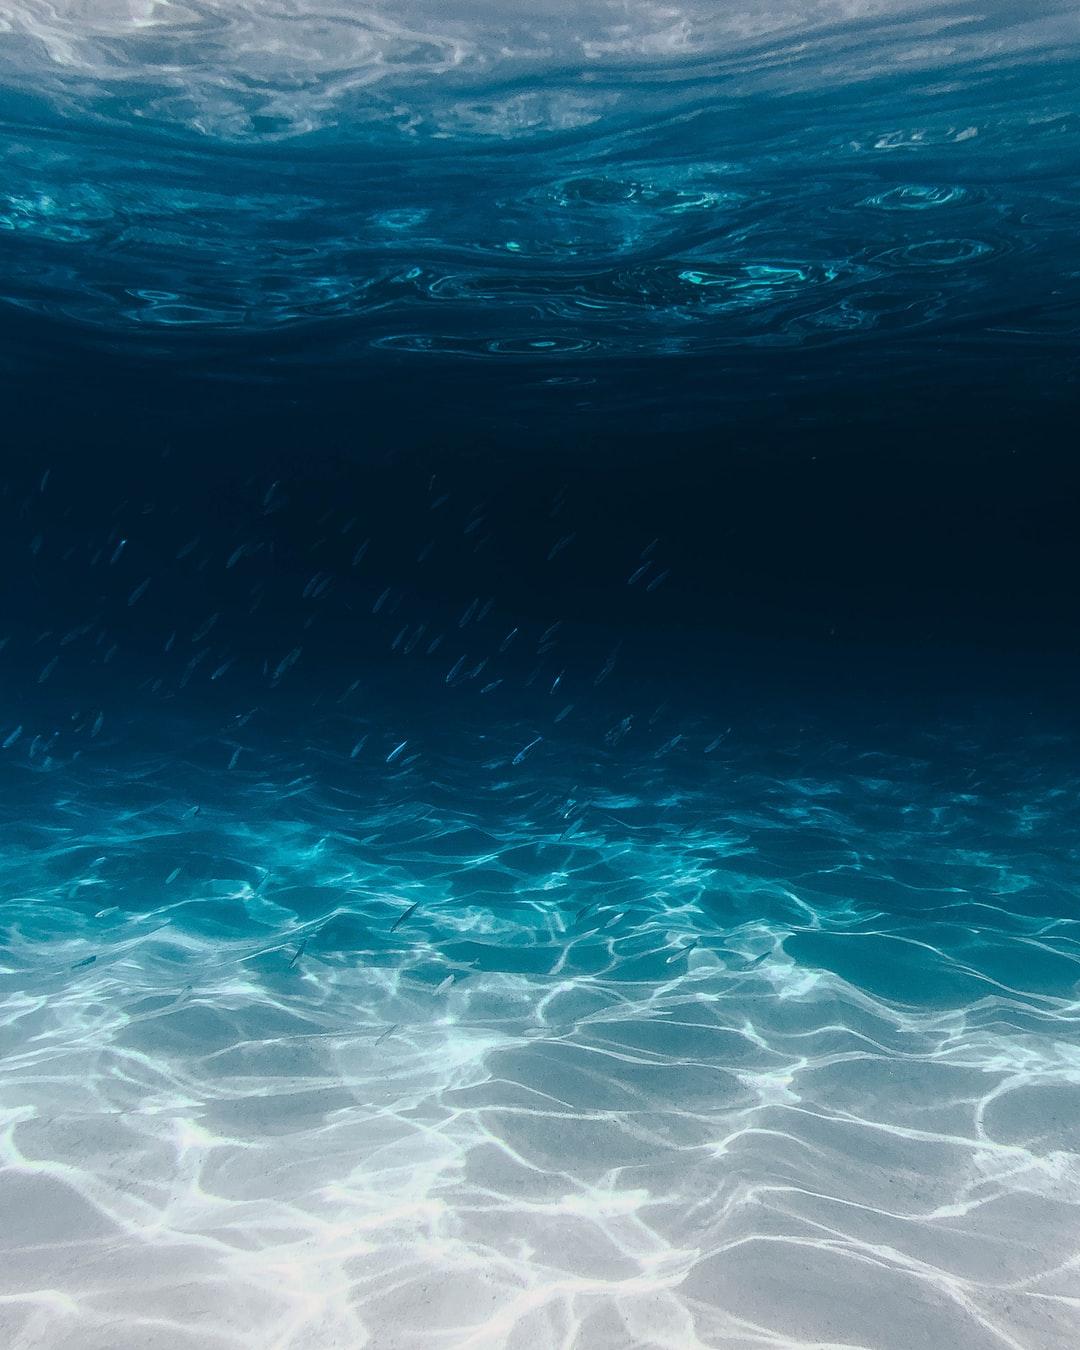 Underwater view of the ocean floor with sand and fish. - Water, underwater, ocean